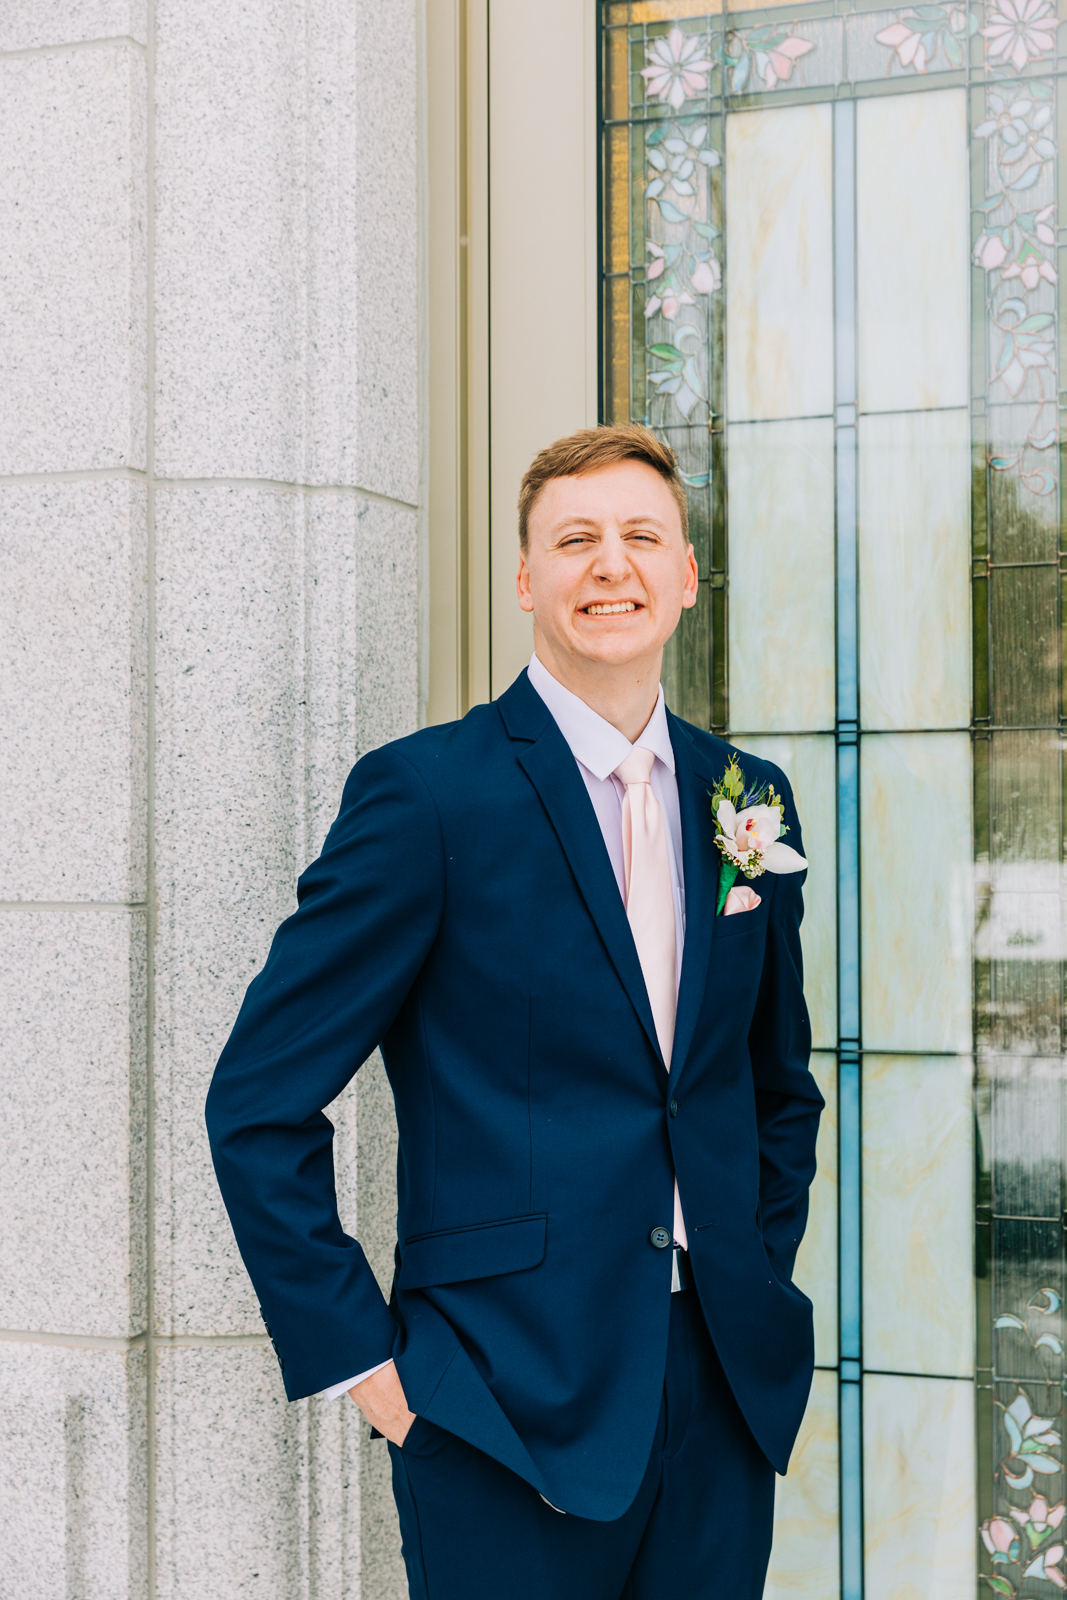 Jackson Hole wedding photographer captures groom smiling and wearing navy